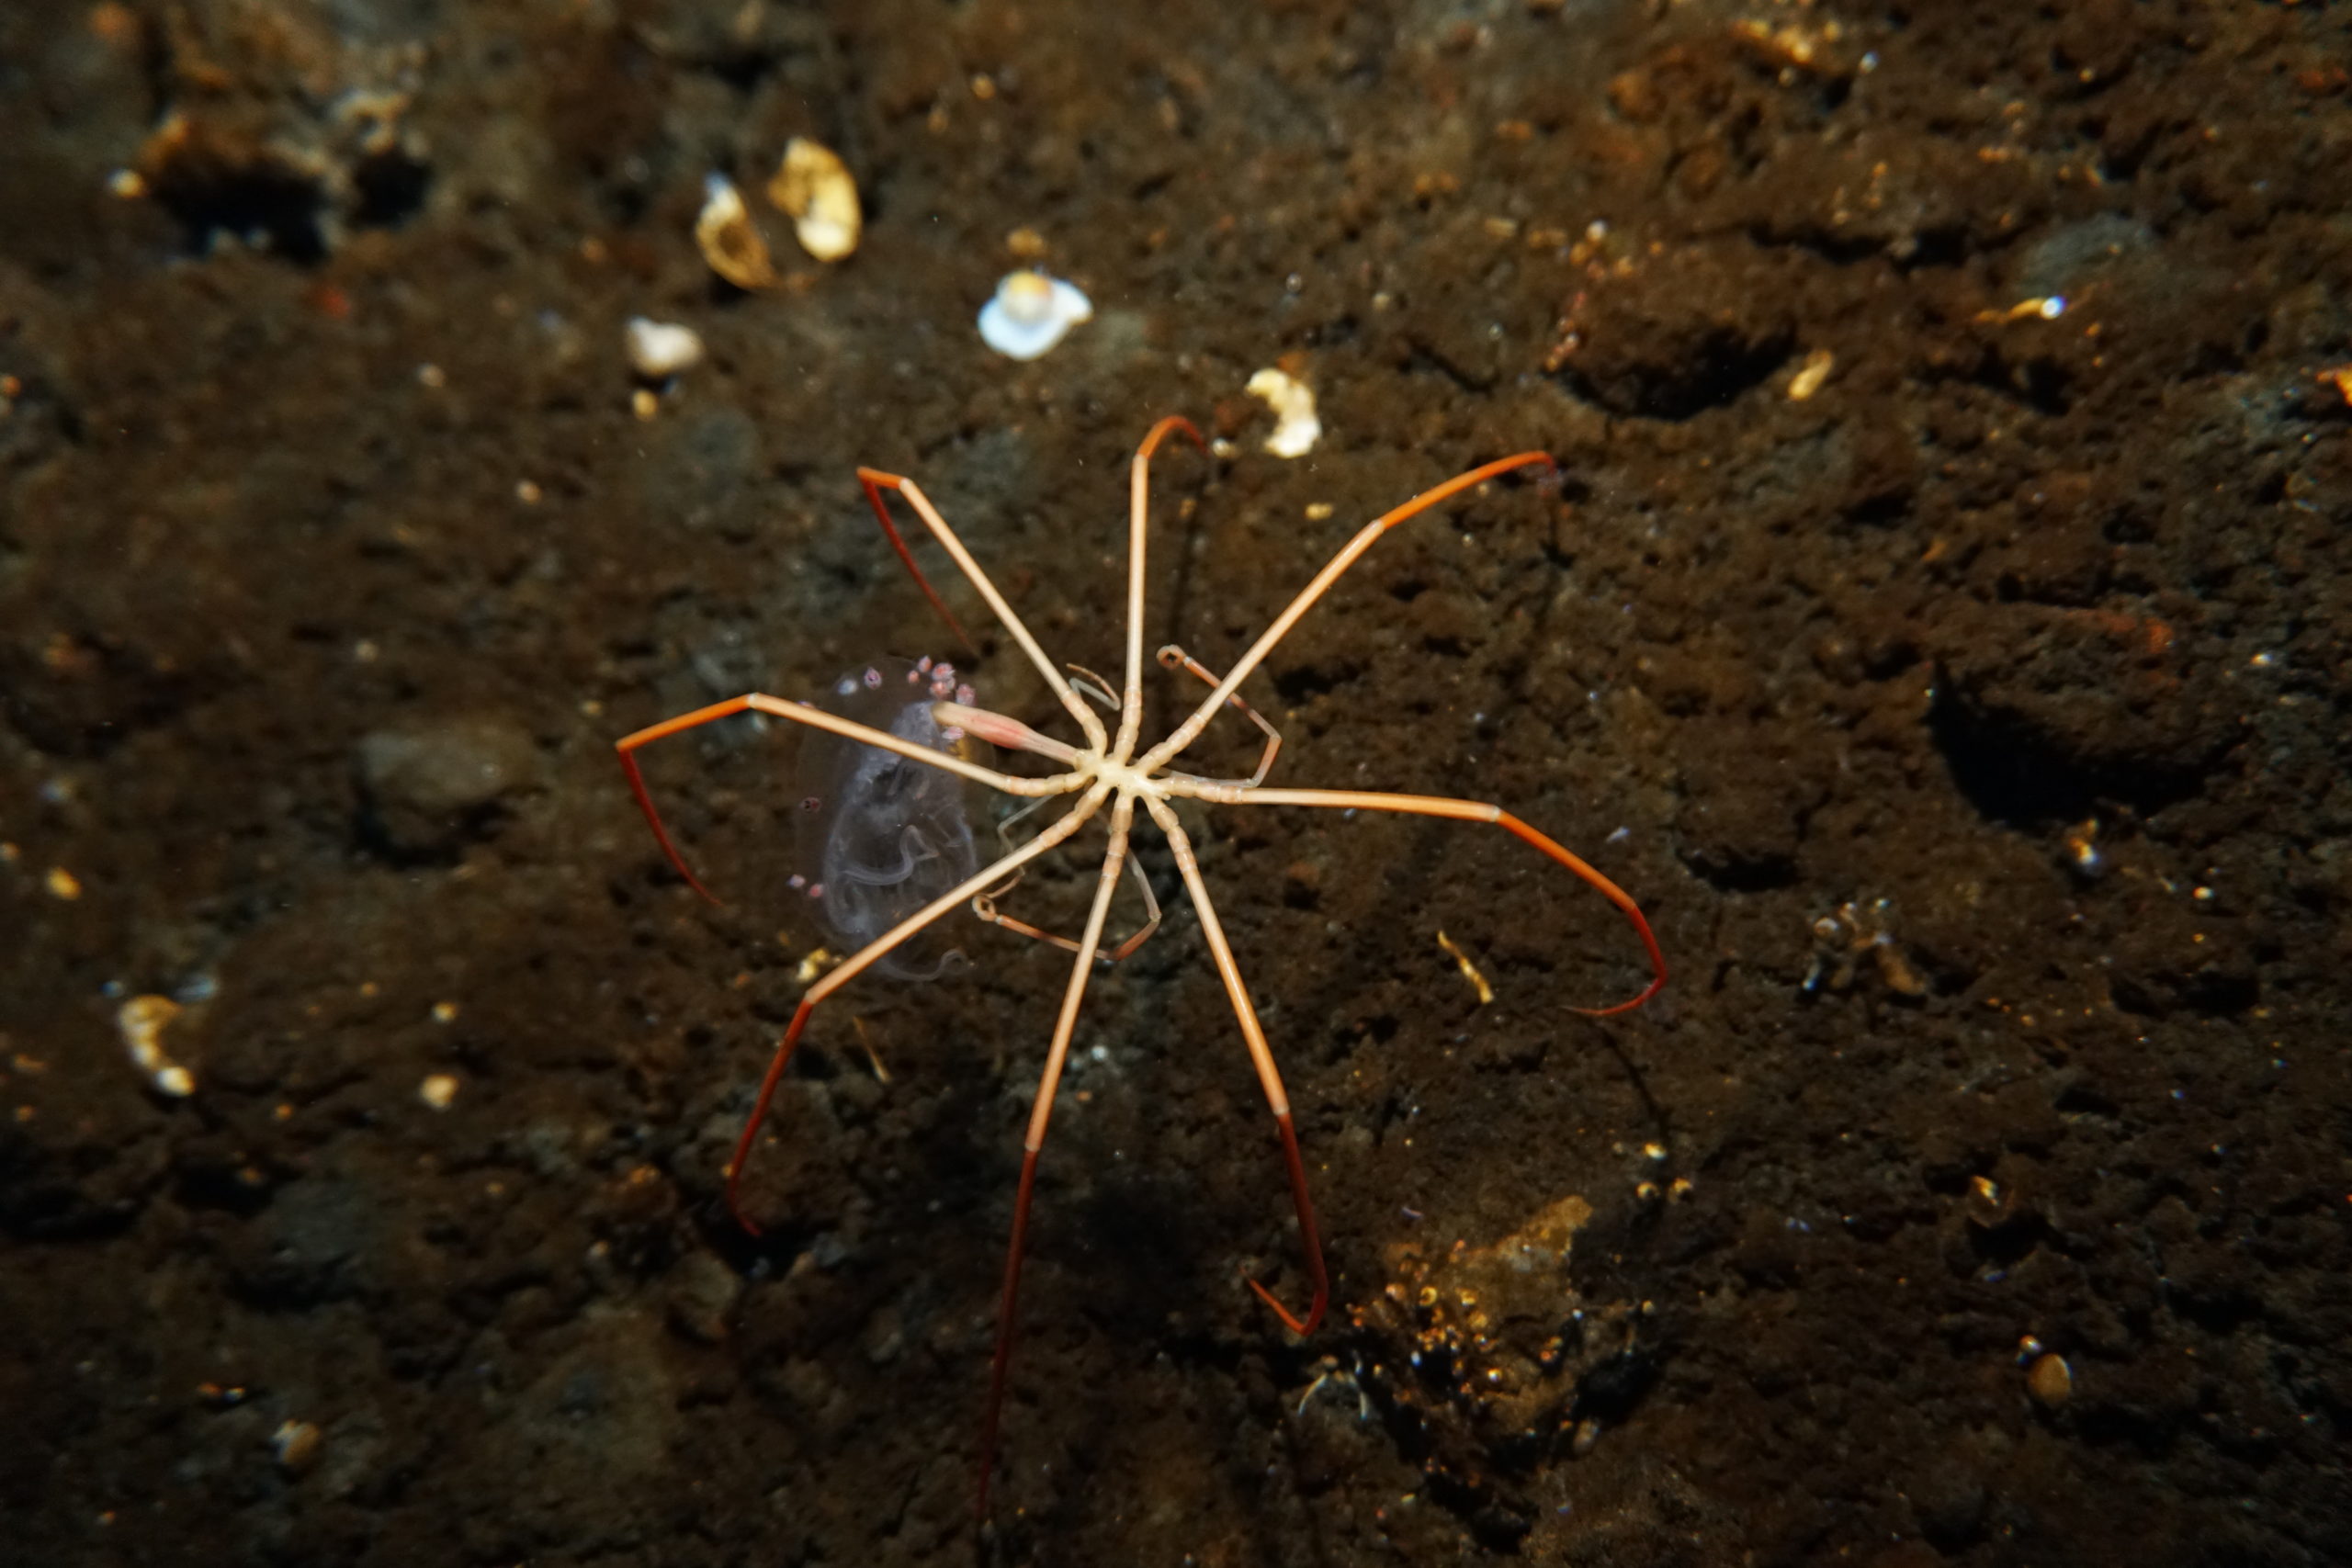 Nightmarish Sea Spiders Pump Their Blood Using Their Guts